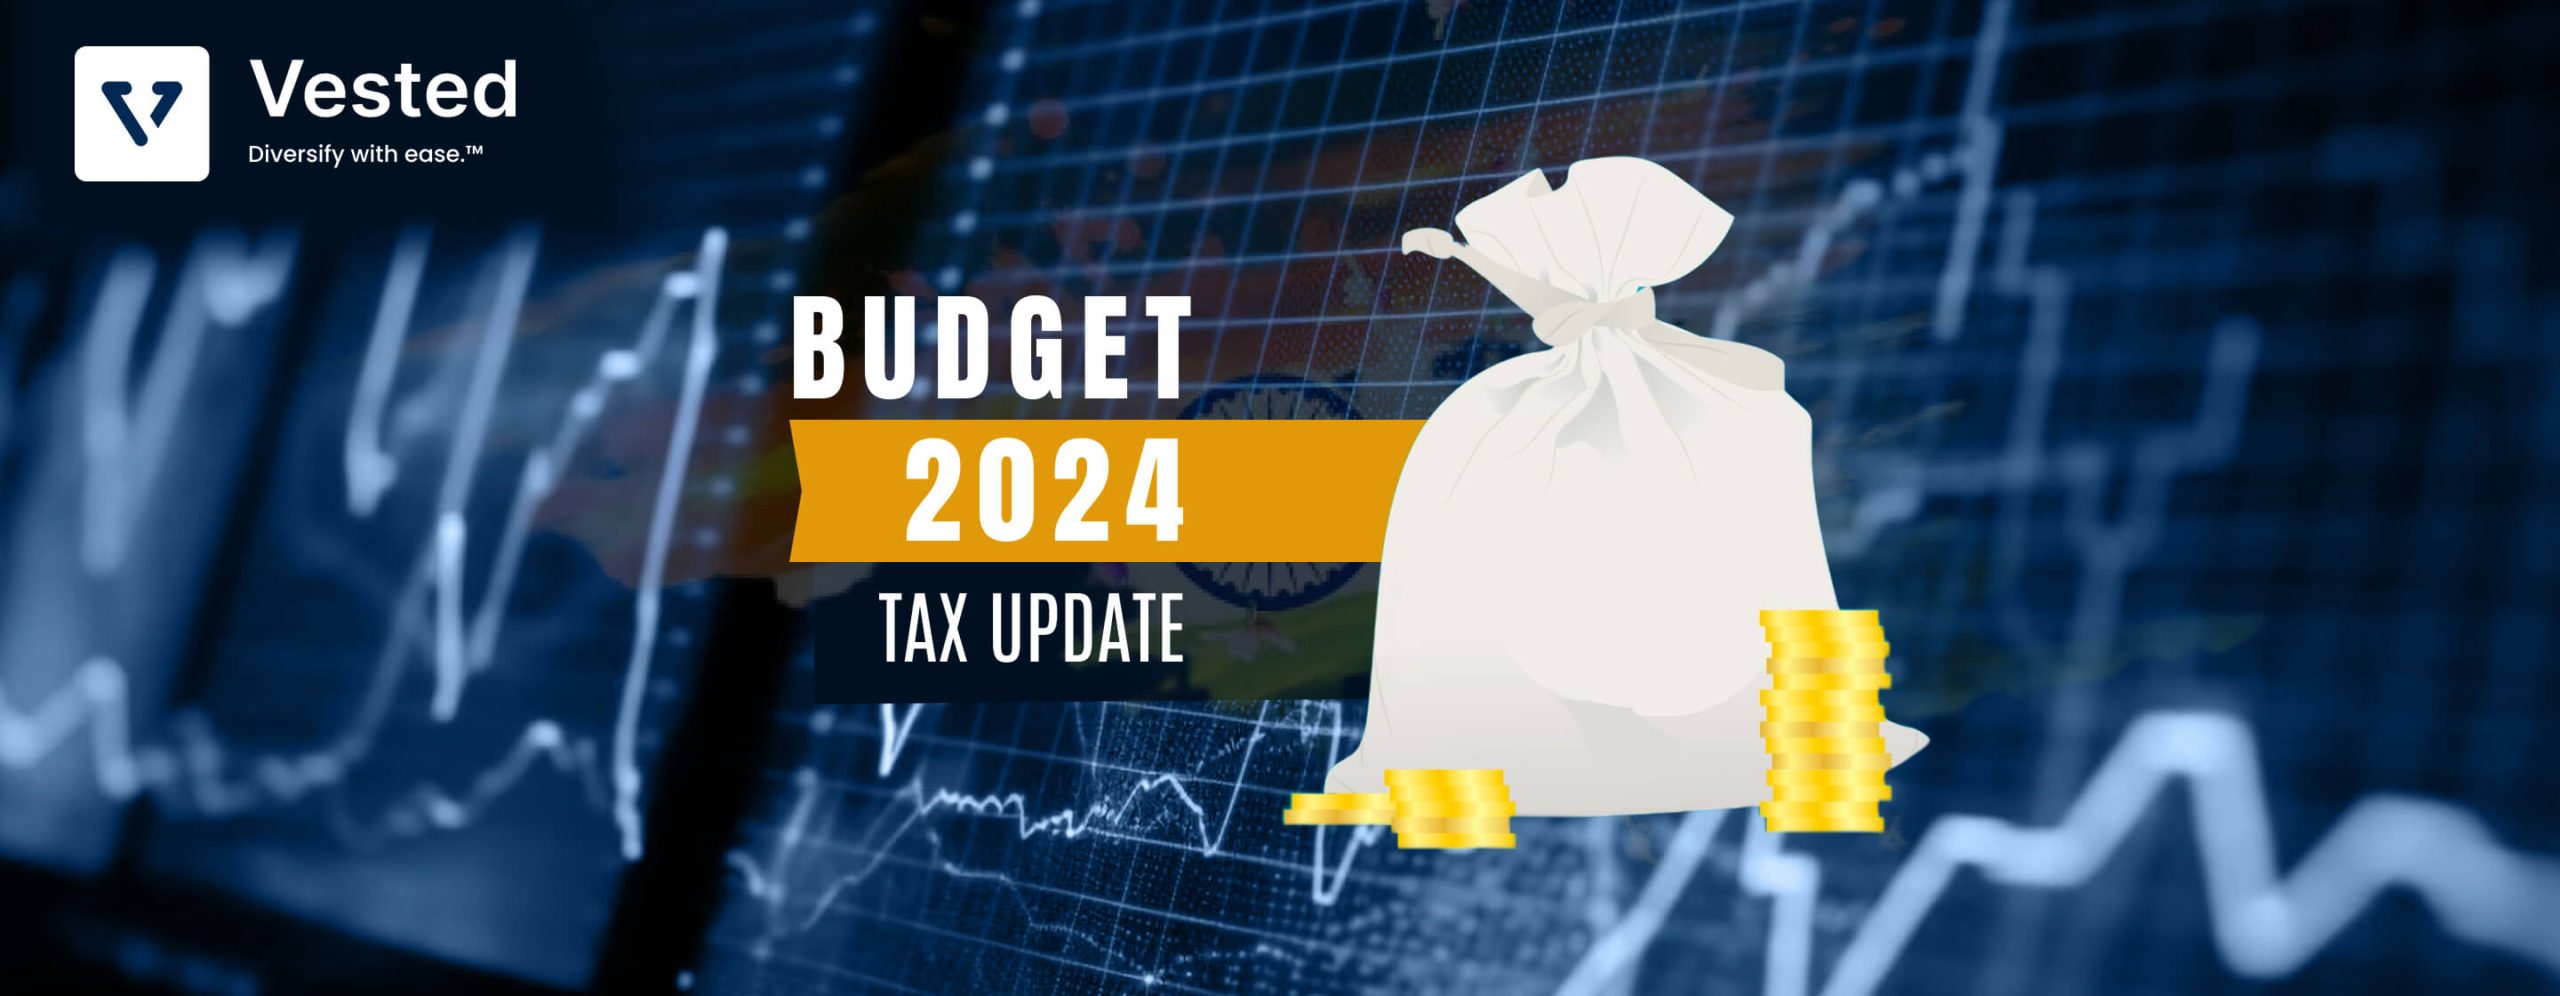 Finance Budget 2024 - Tax update